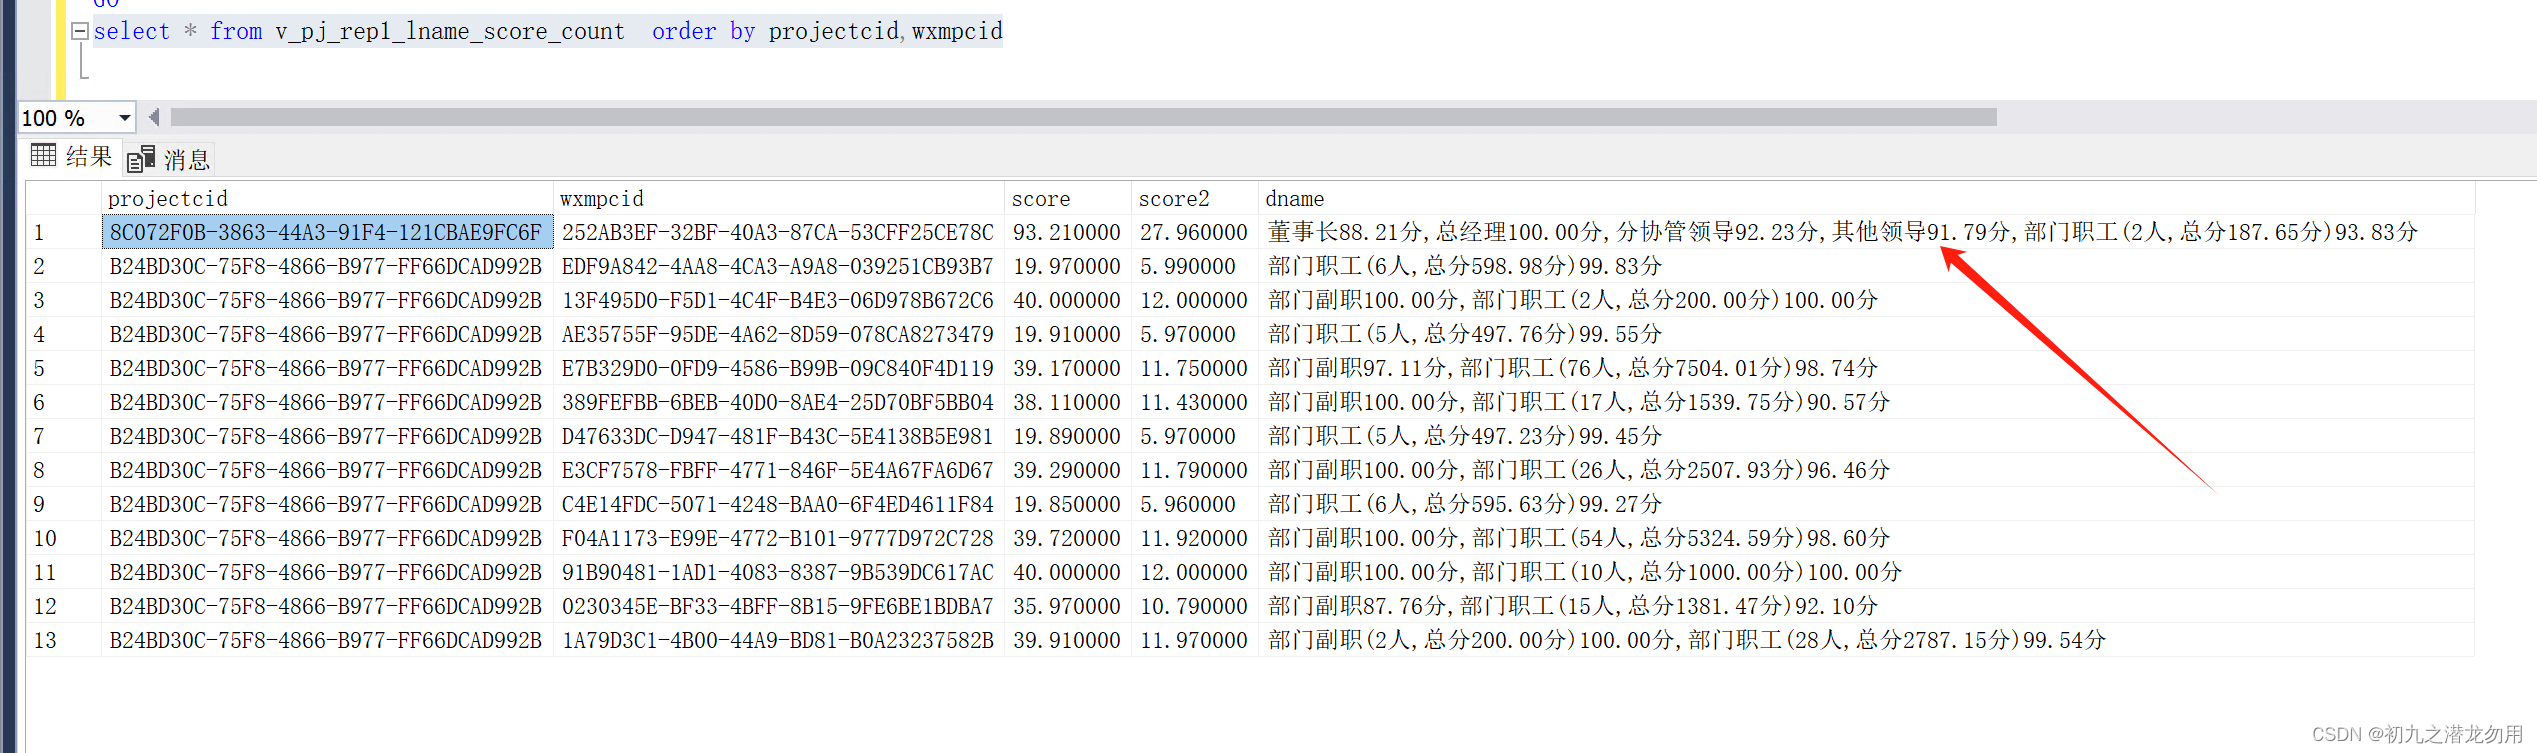 MS SQL Server STUFF 函数实战 统计记录行转为列显示